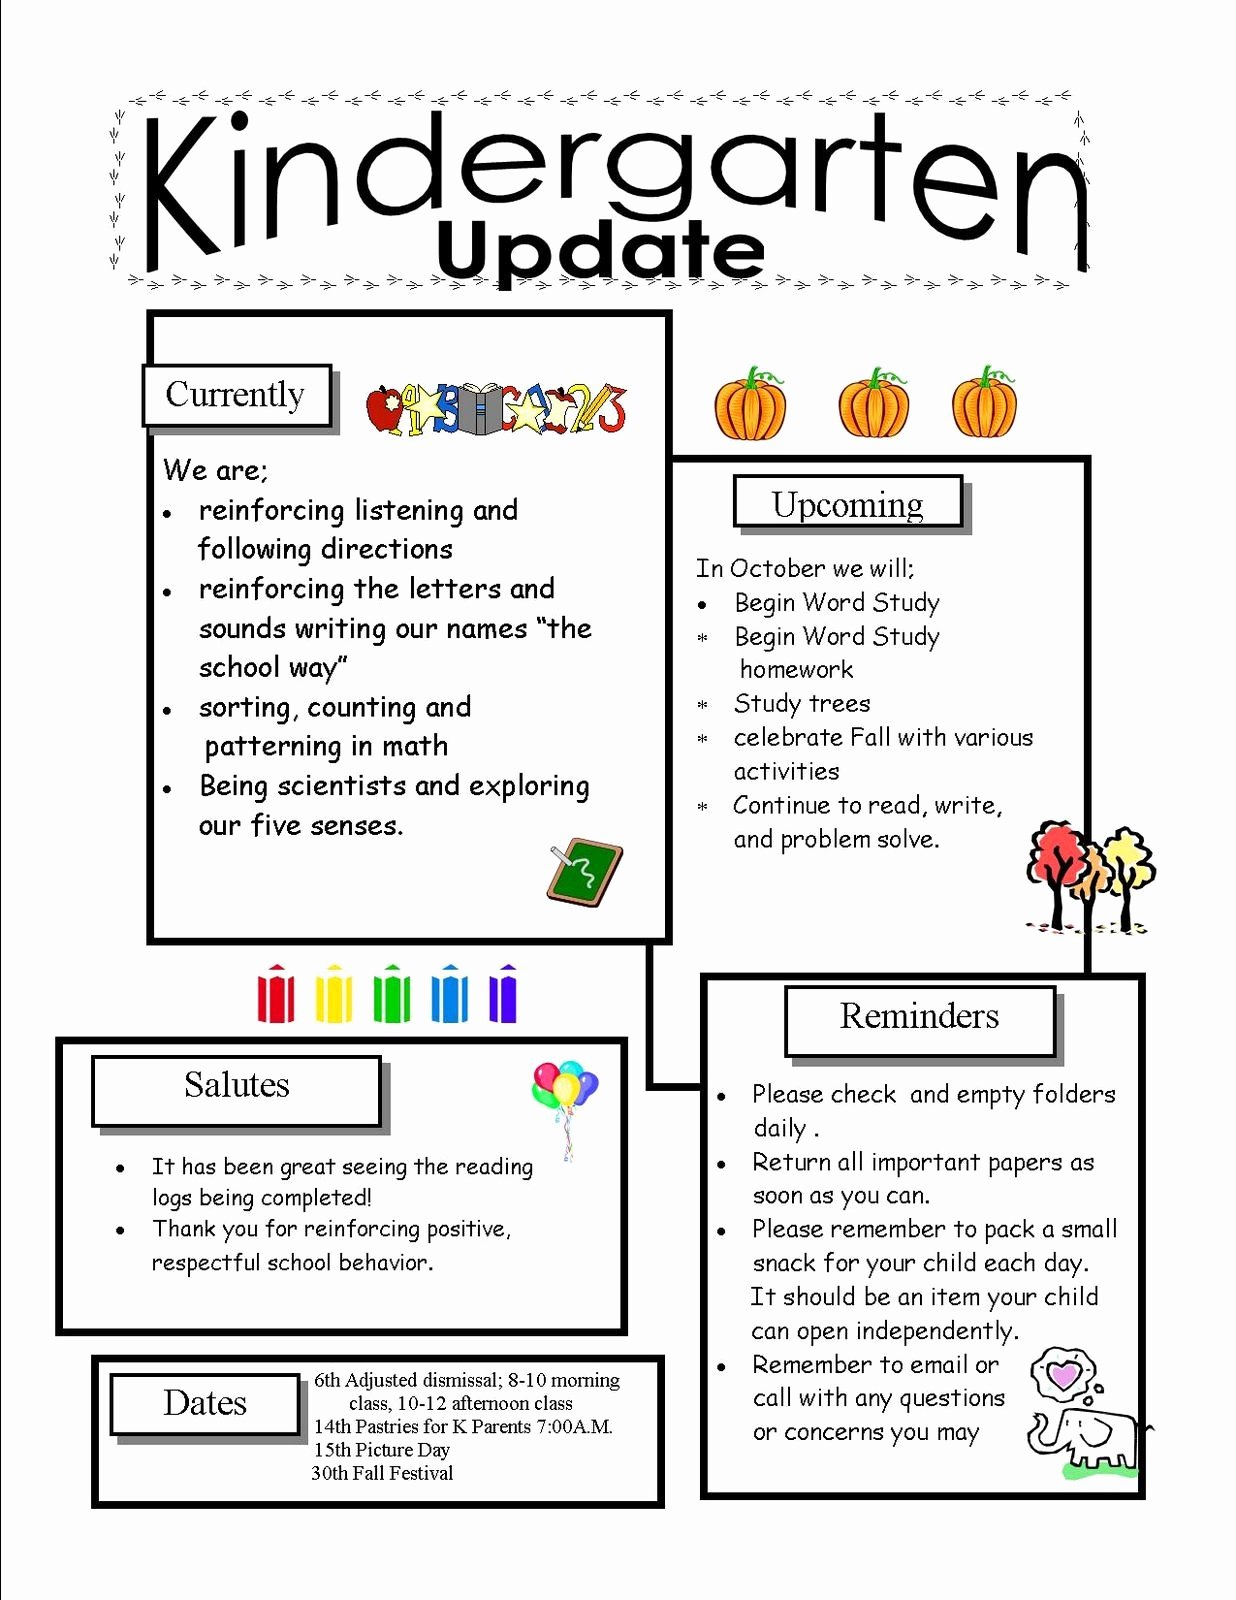 Preschool Newsletter Template Free New Kindergarten Newsletter Templates for Free